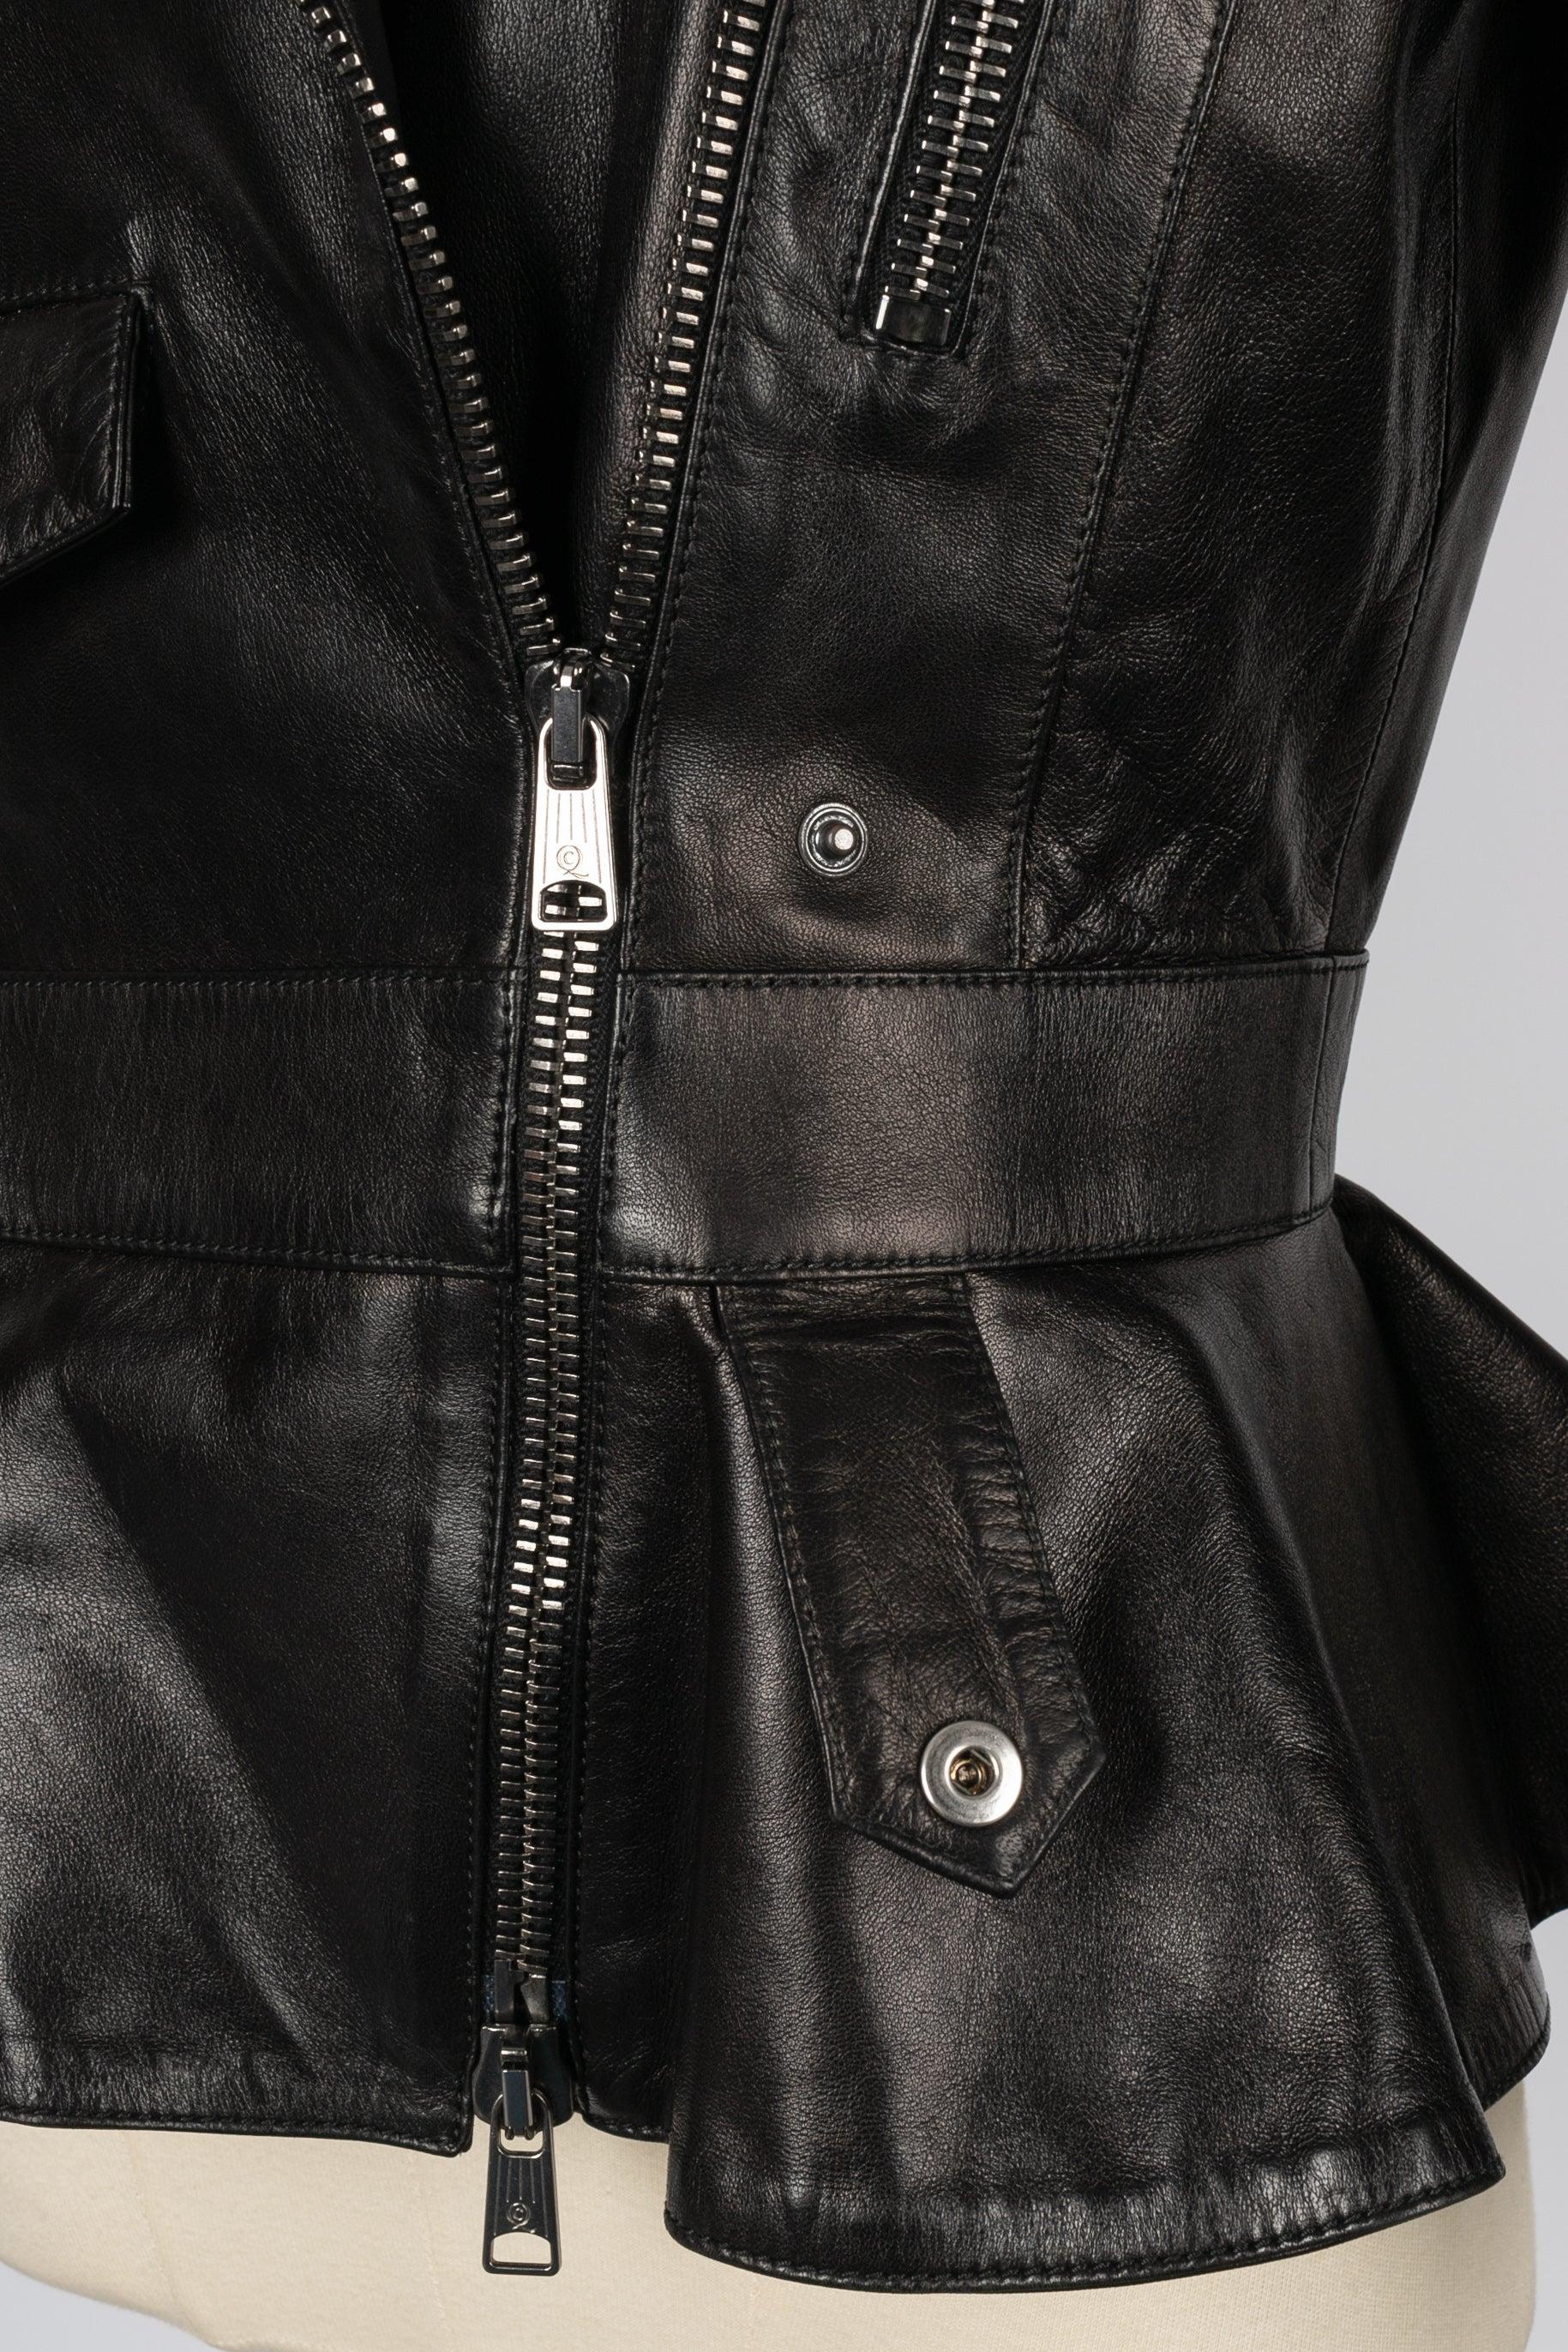 Alexander Mc Queen Black Leather Jacket For Sale 3